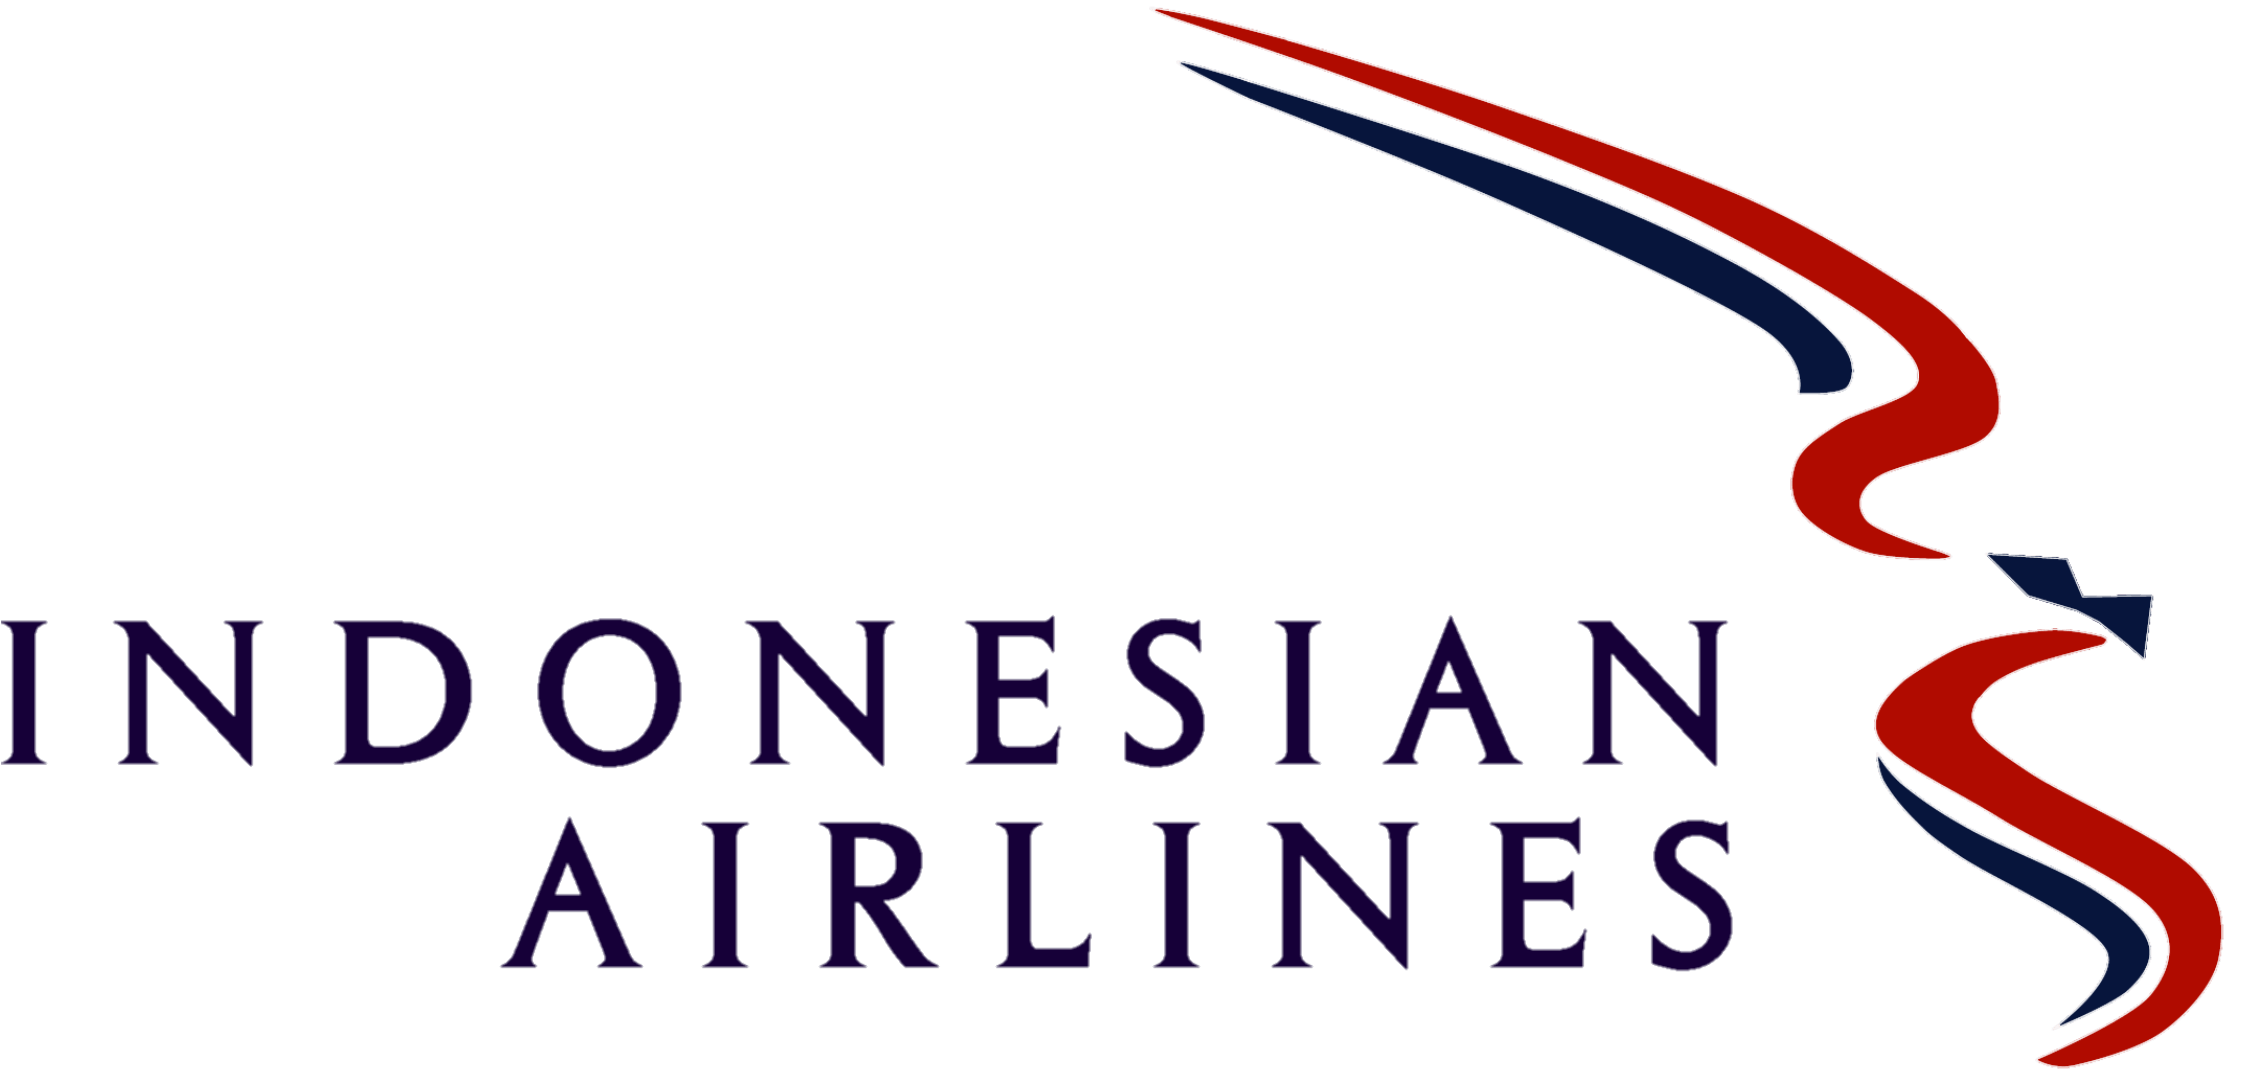 Indonesia airlines logo